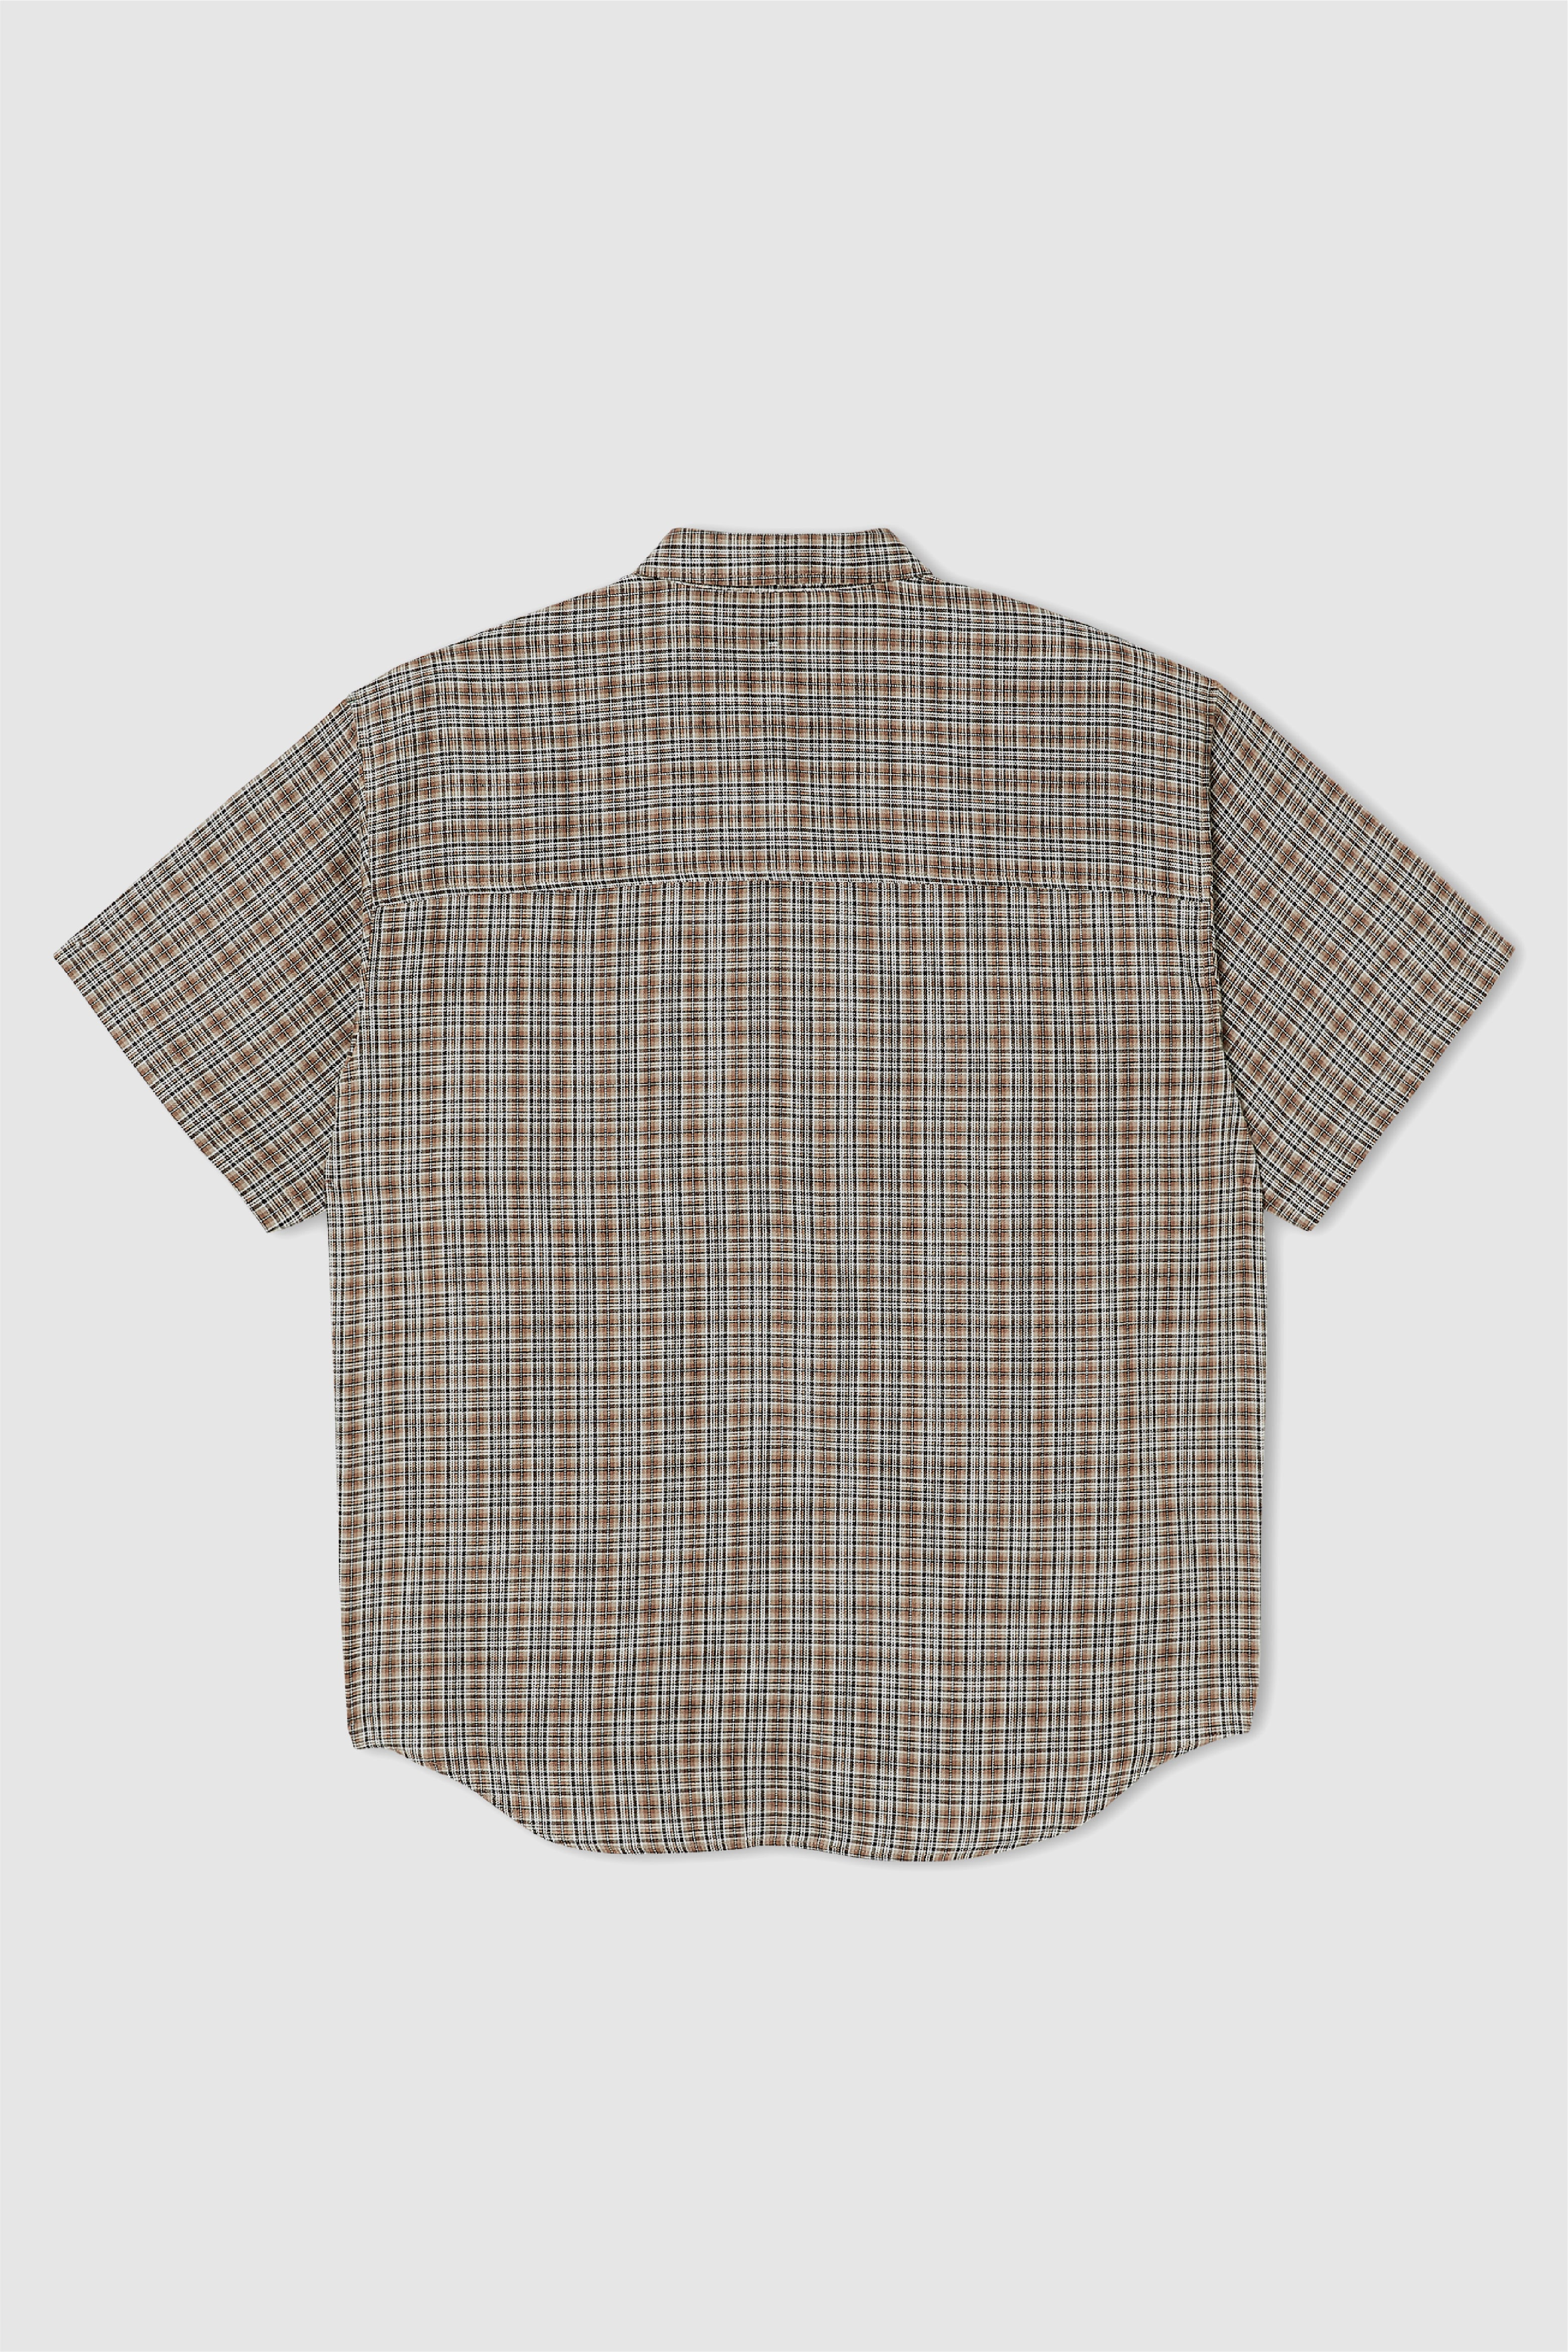 Selectshop FRAME - POLAR SKATE CO. Mitchell Flannel Shirt Shirts Dubai